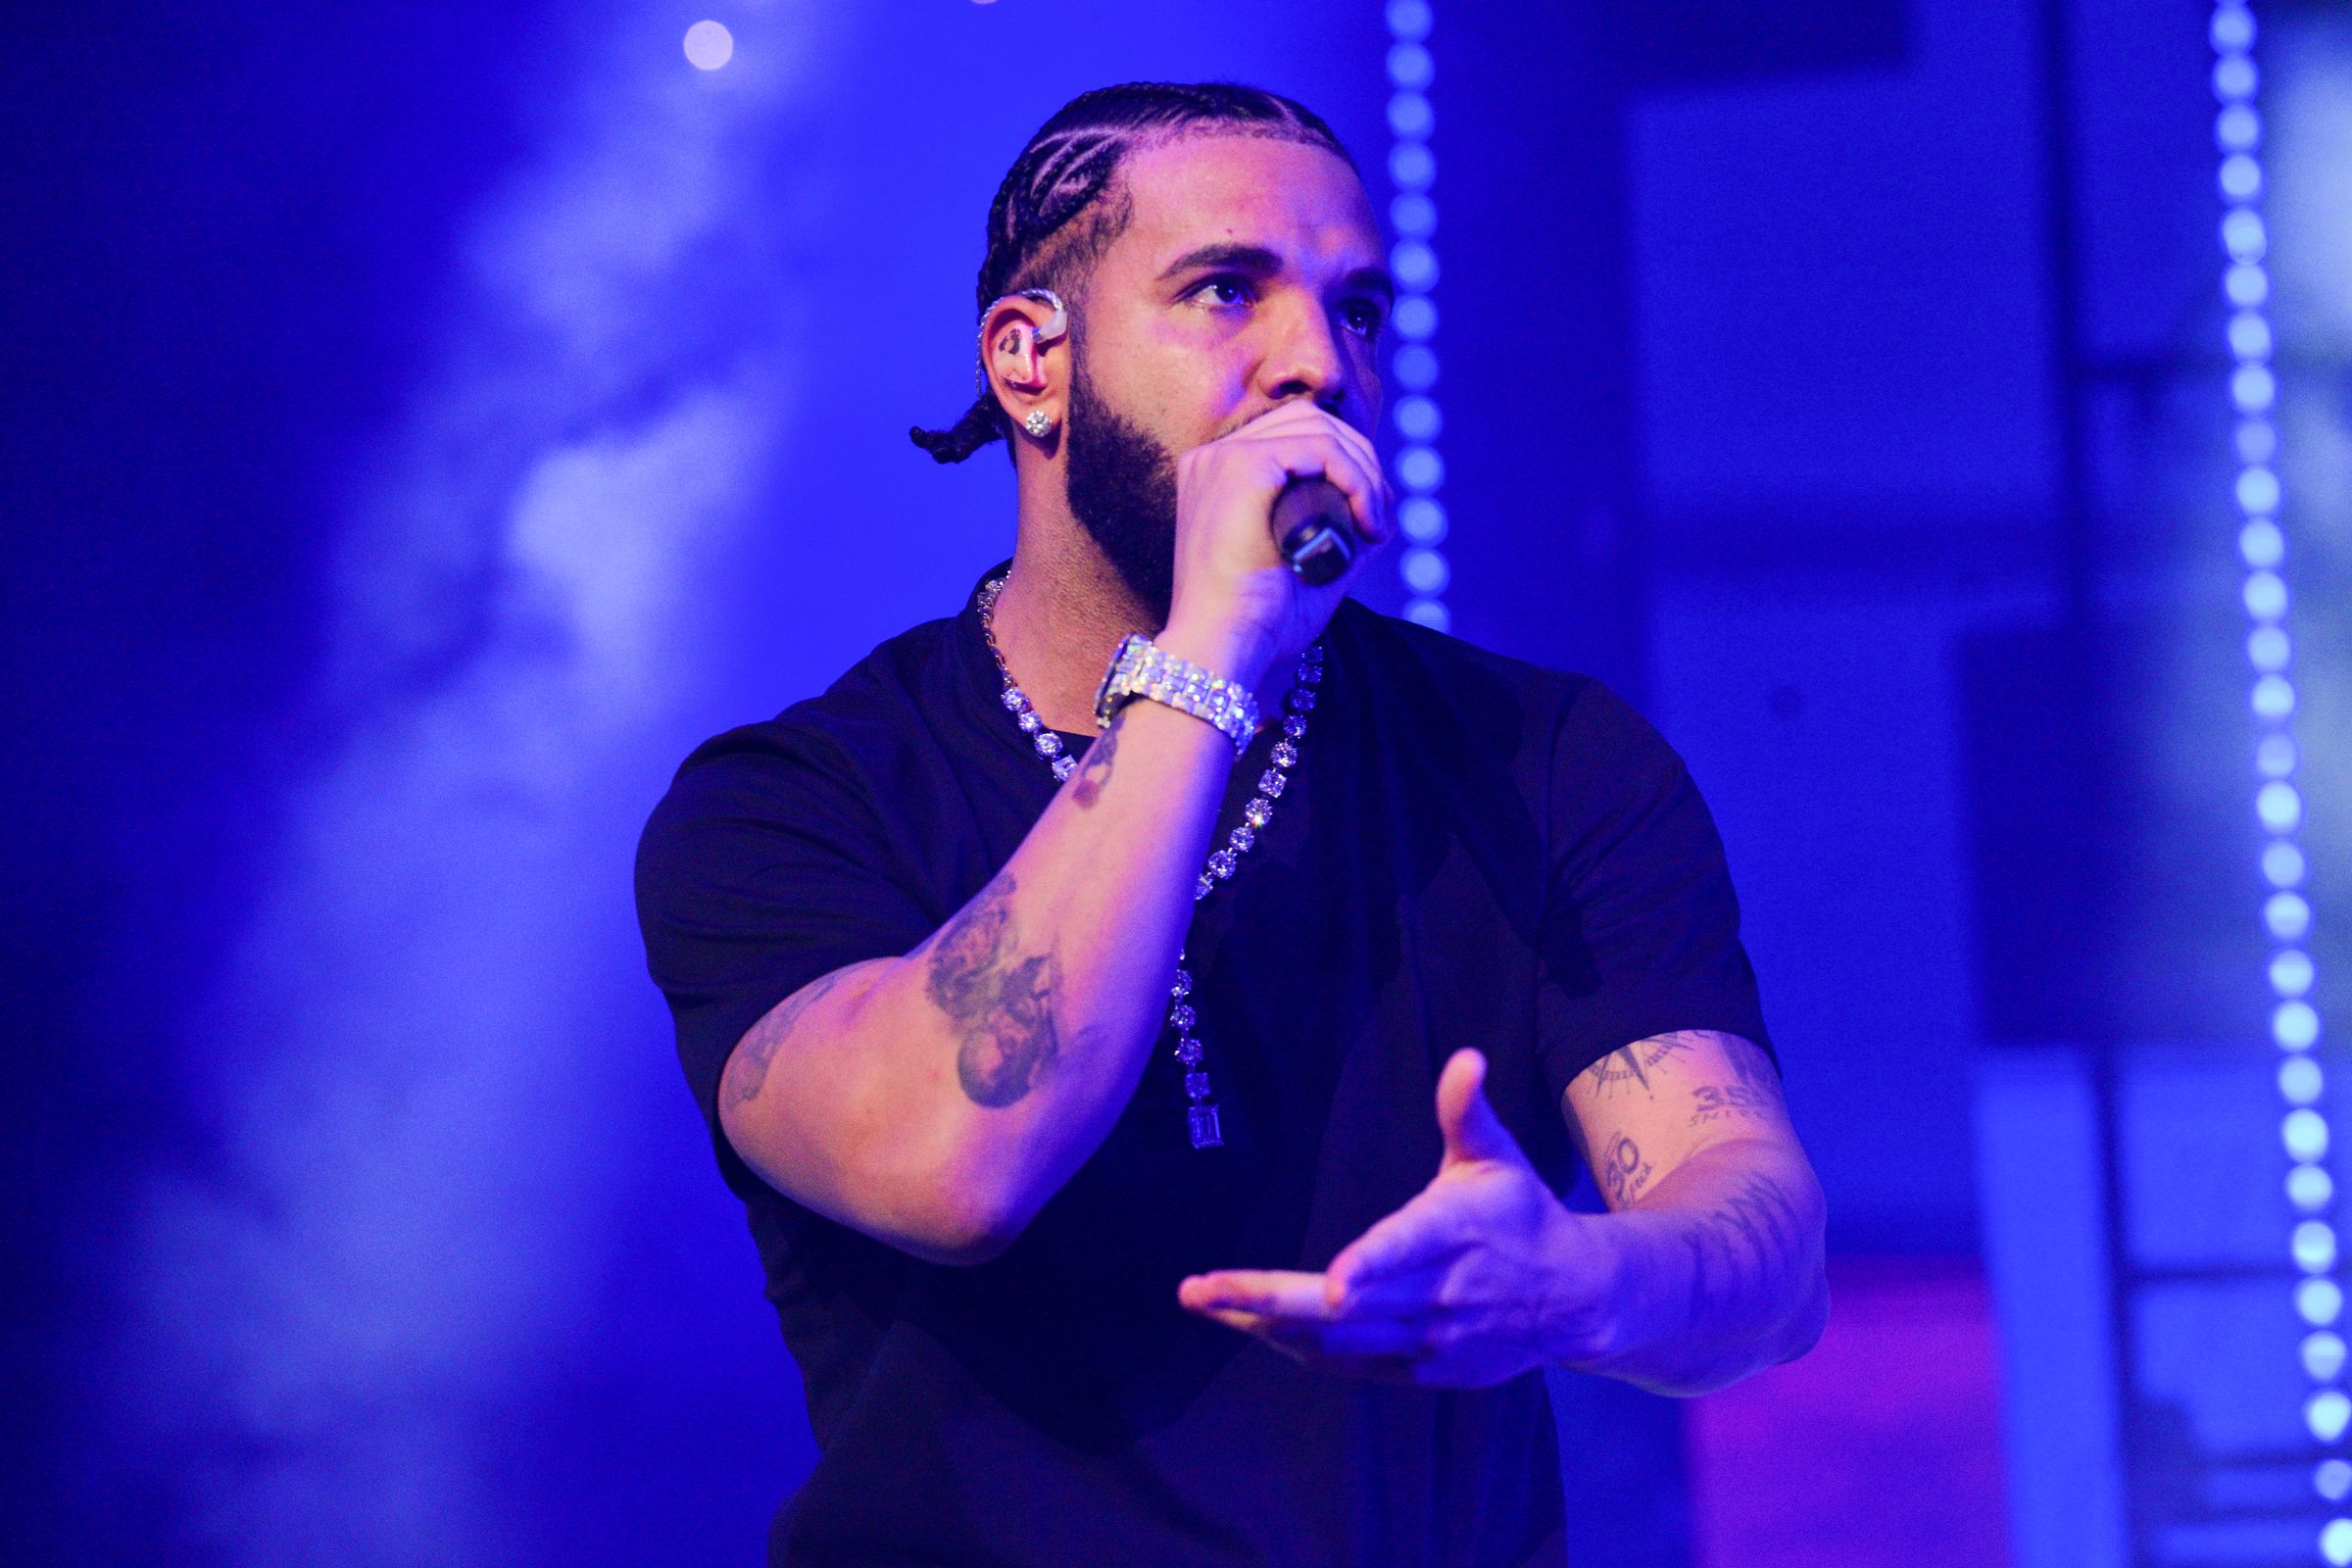 An image showing Drake performing onstage